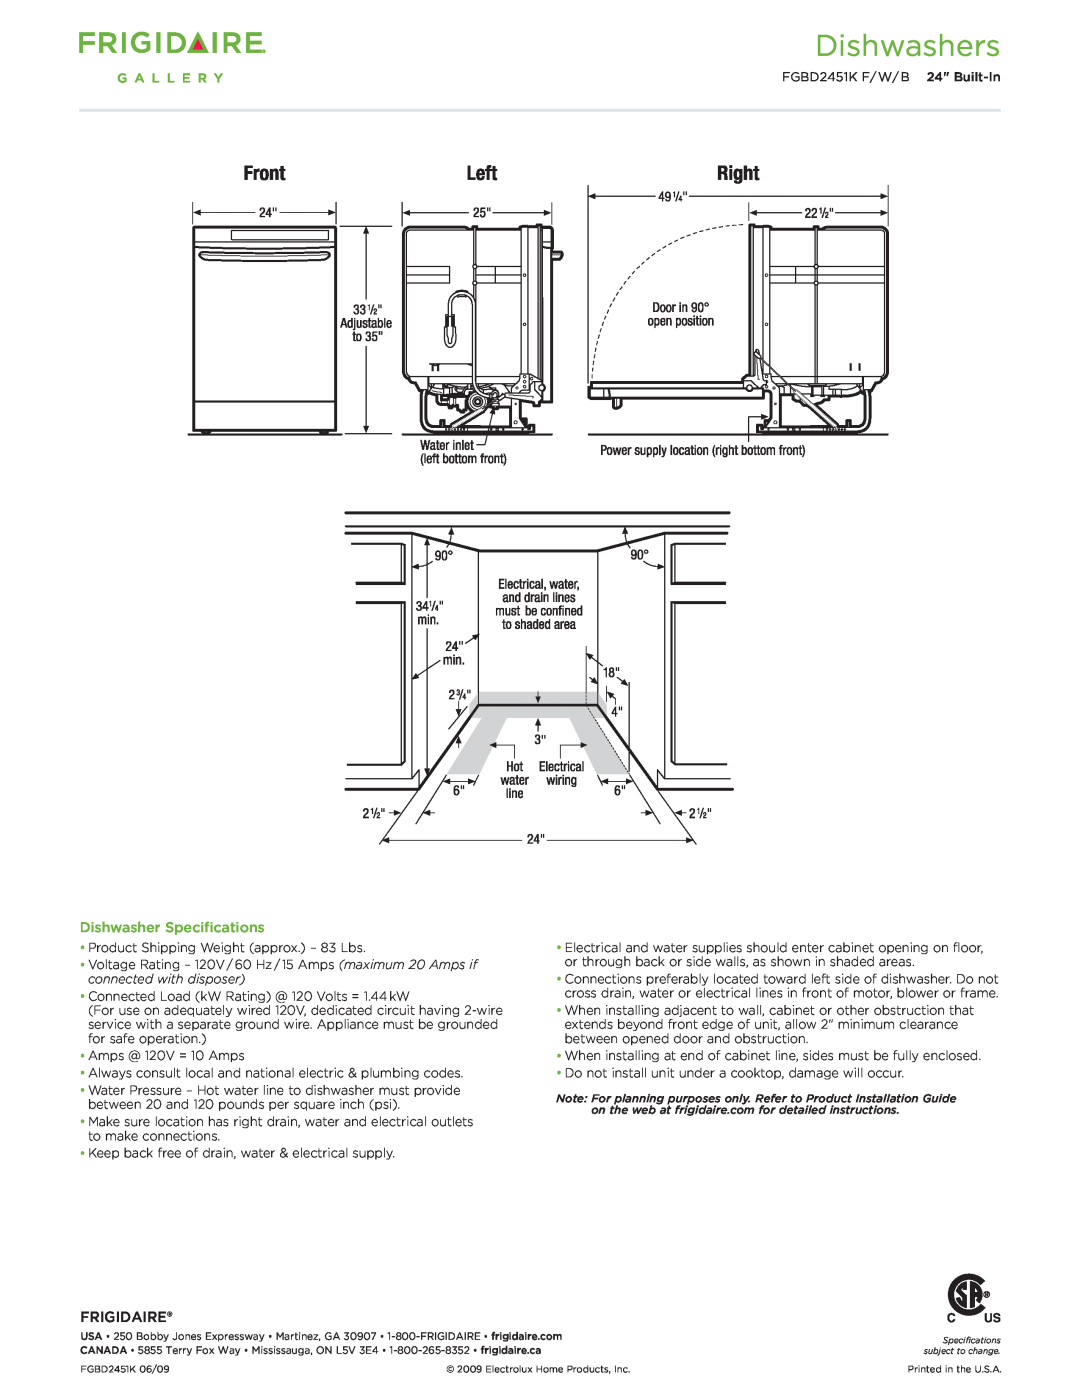 Frigidaire FGBD2451K dimensions Dishwasher Specifications, Frigidaire, Dishwashers 